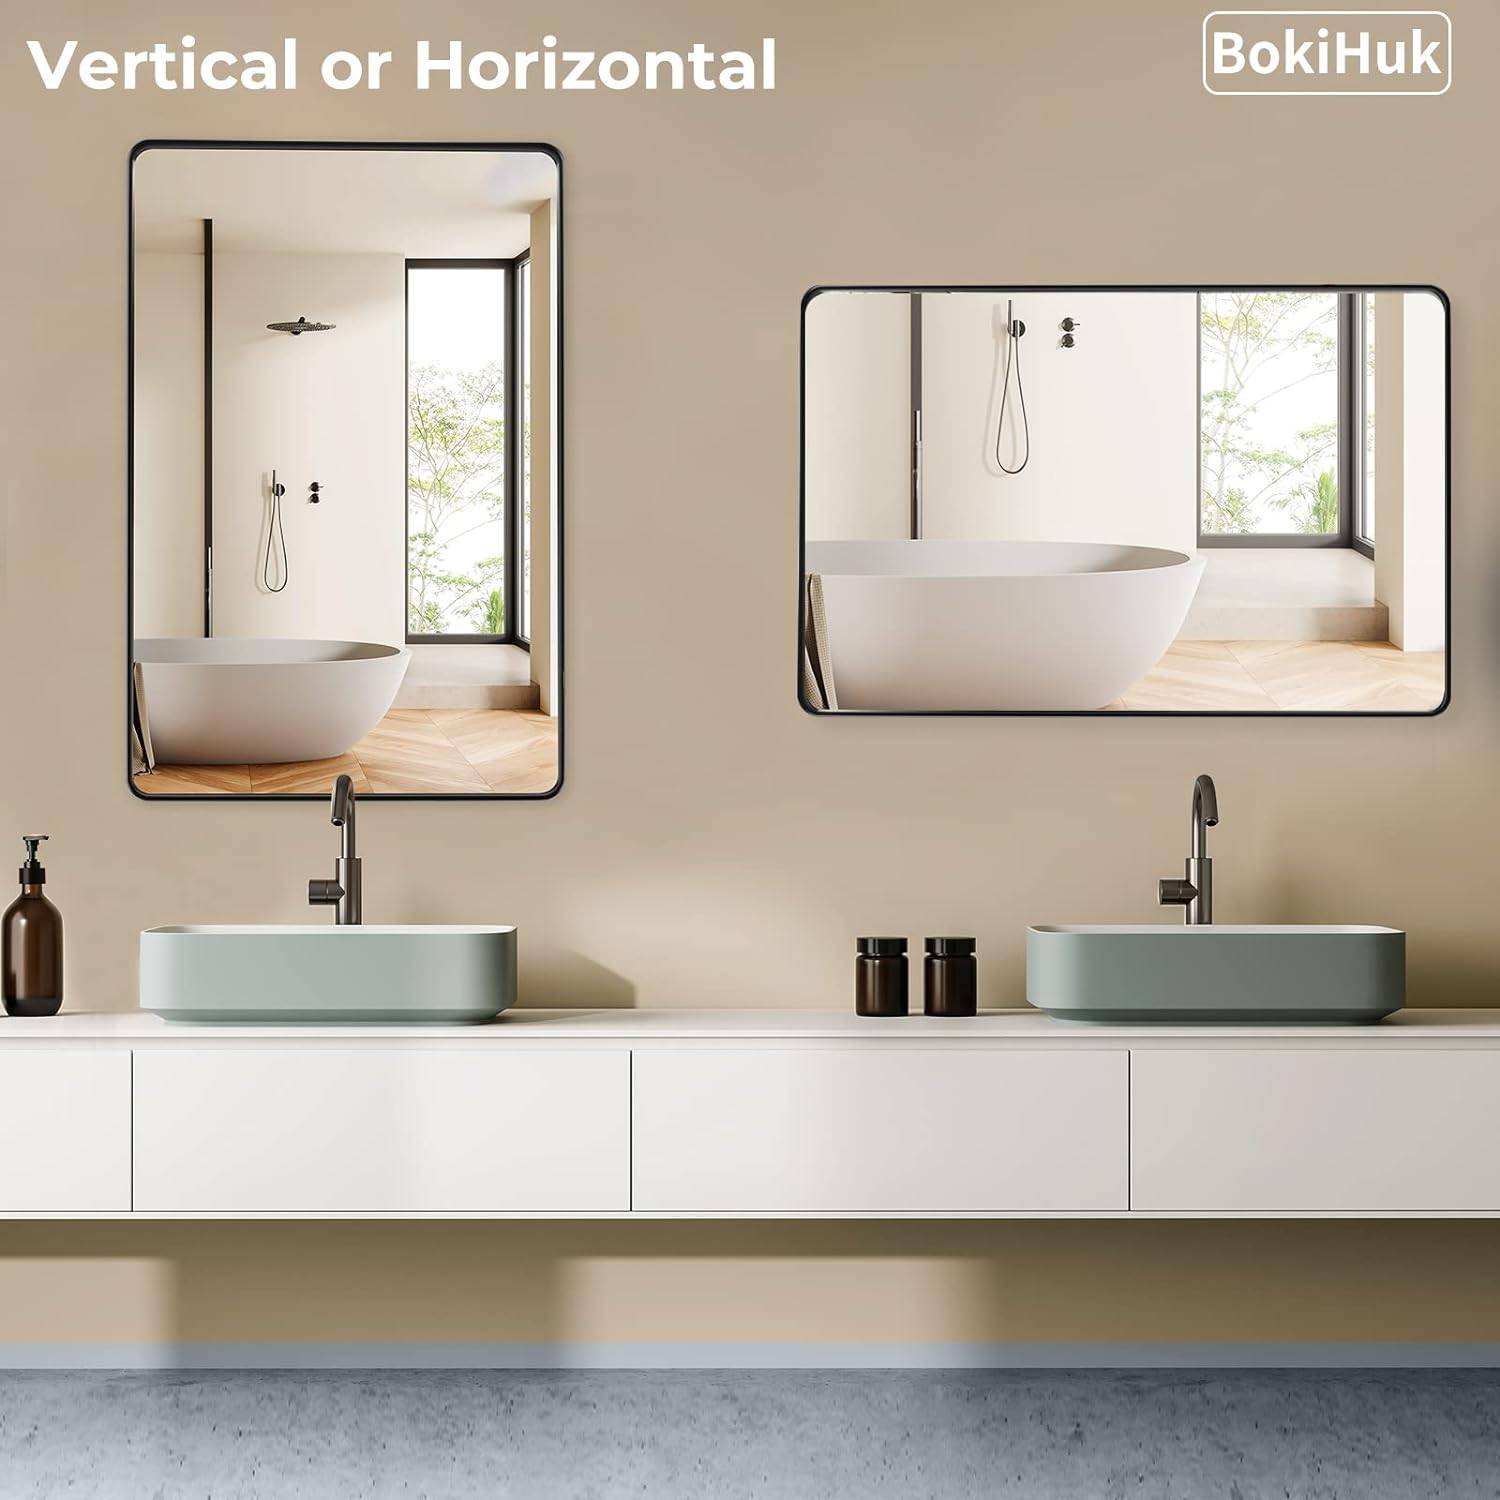 BokiHuk Black Bathroom Mirror for Wall 36x24 Inch